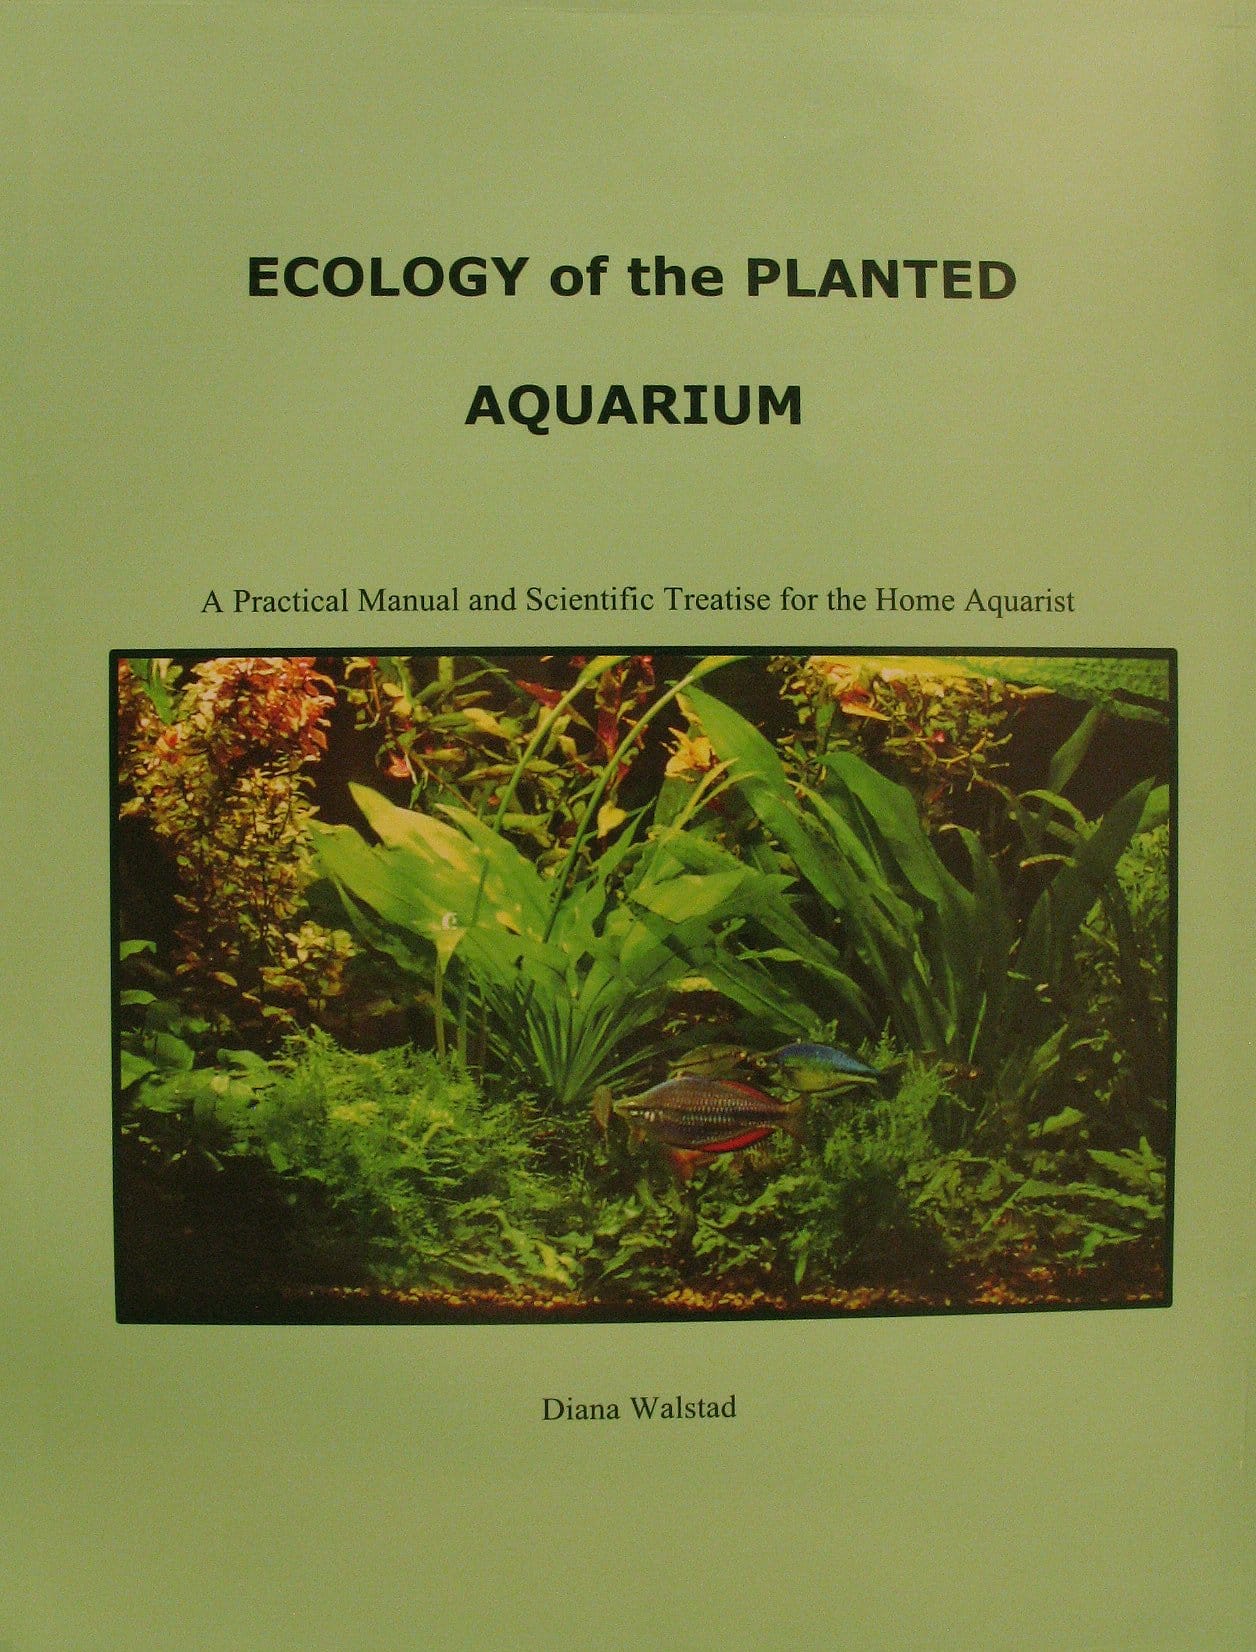 Diana Walstad Book Ecology of the planted aquarium